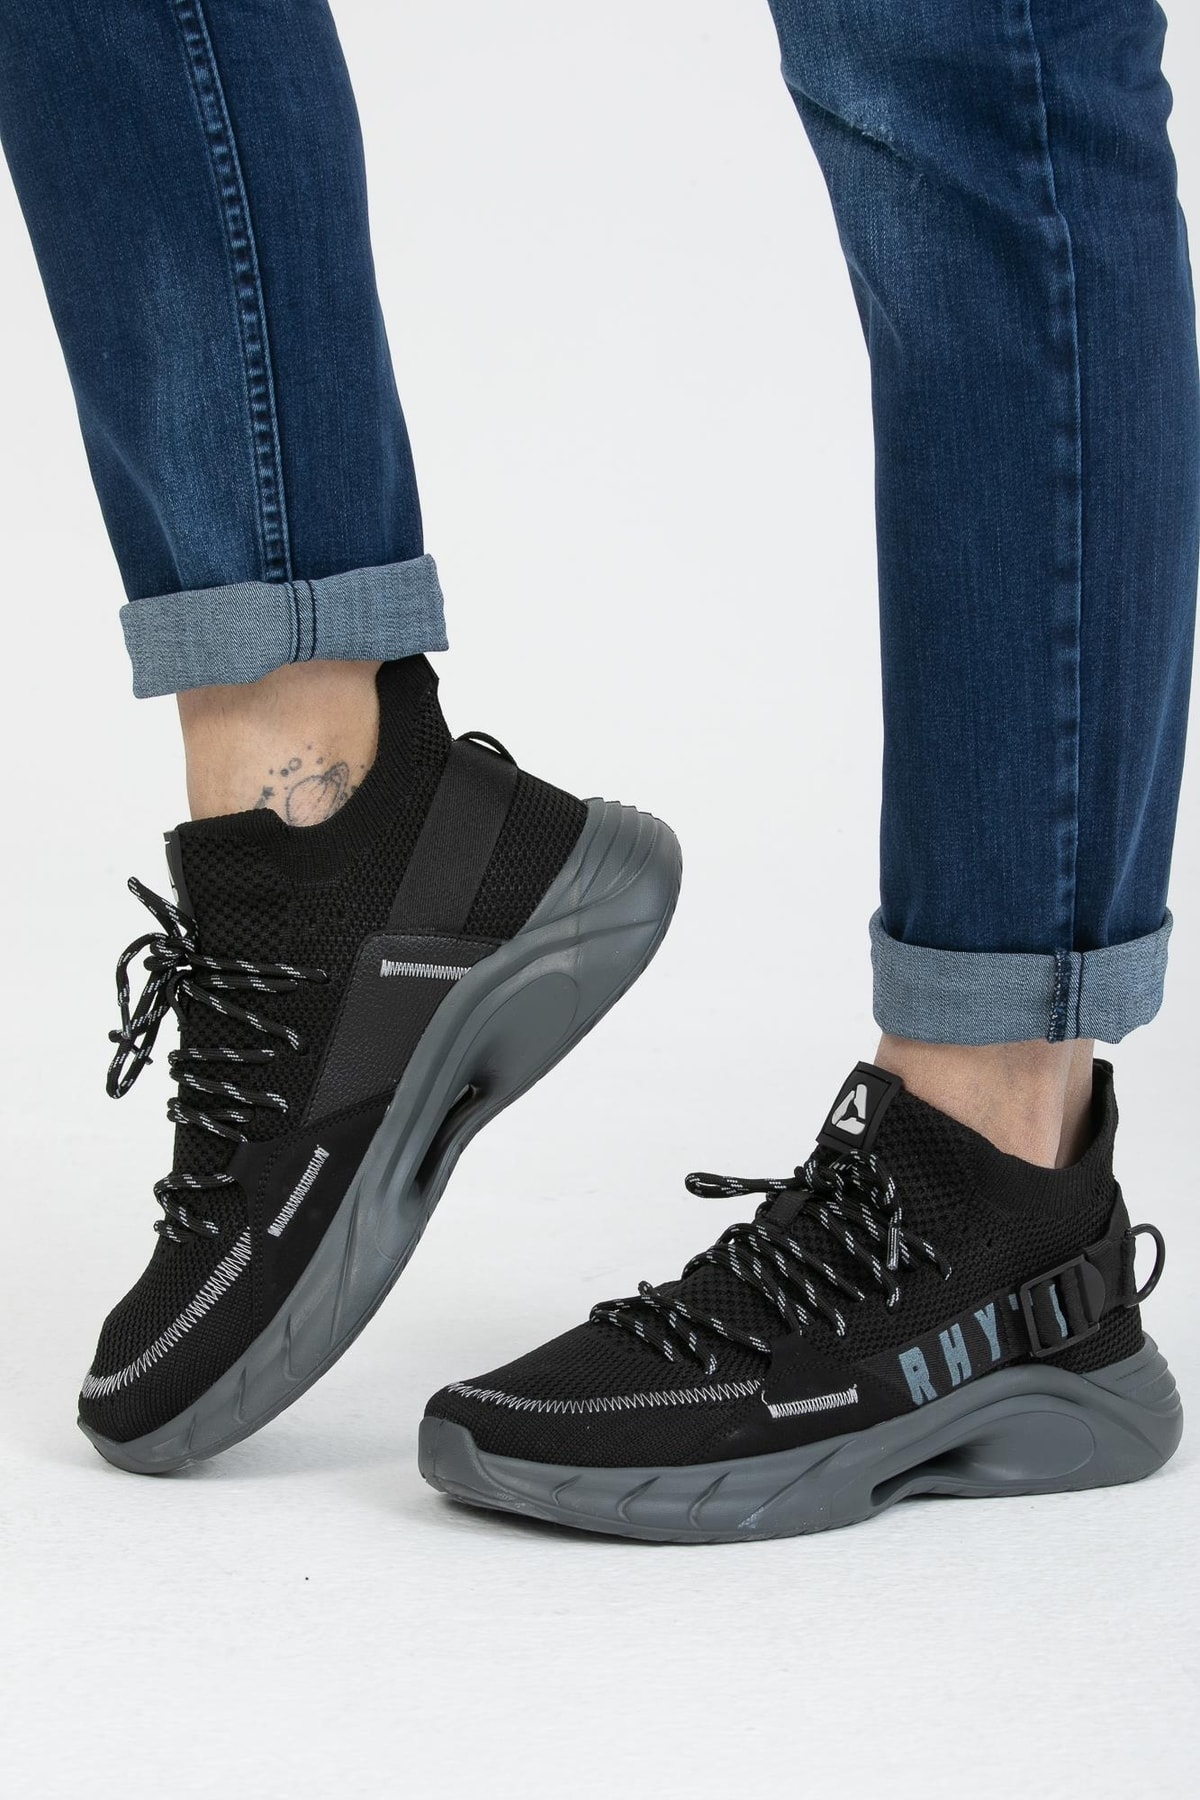 LETOON Rhythm - Black Unisex Sneaker Shoes